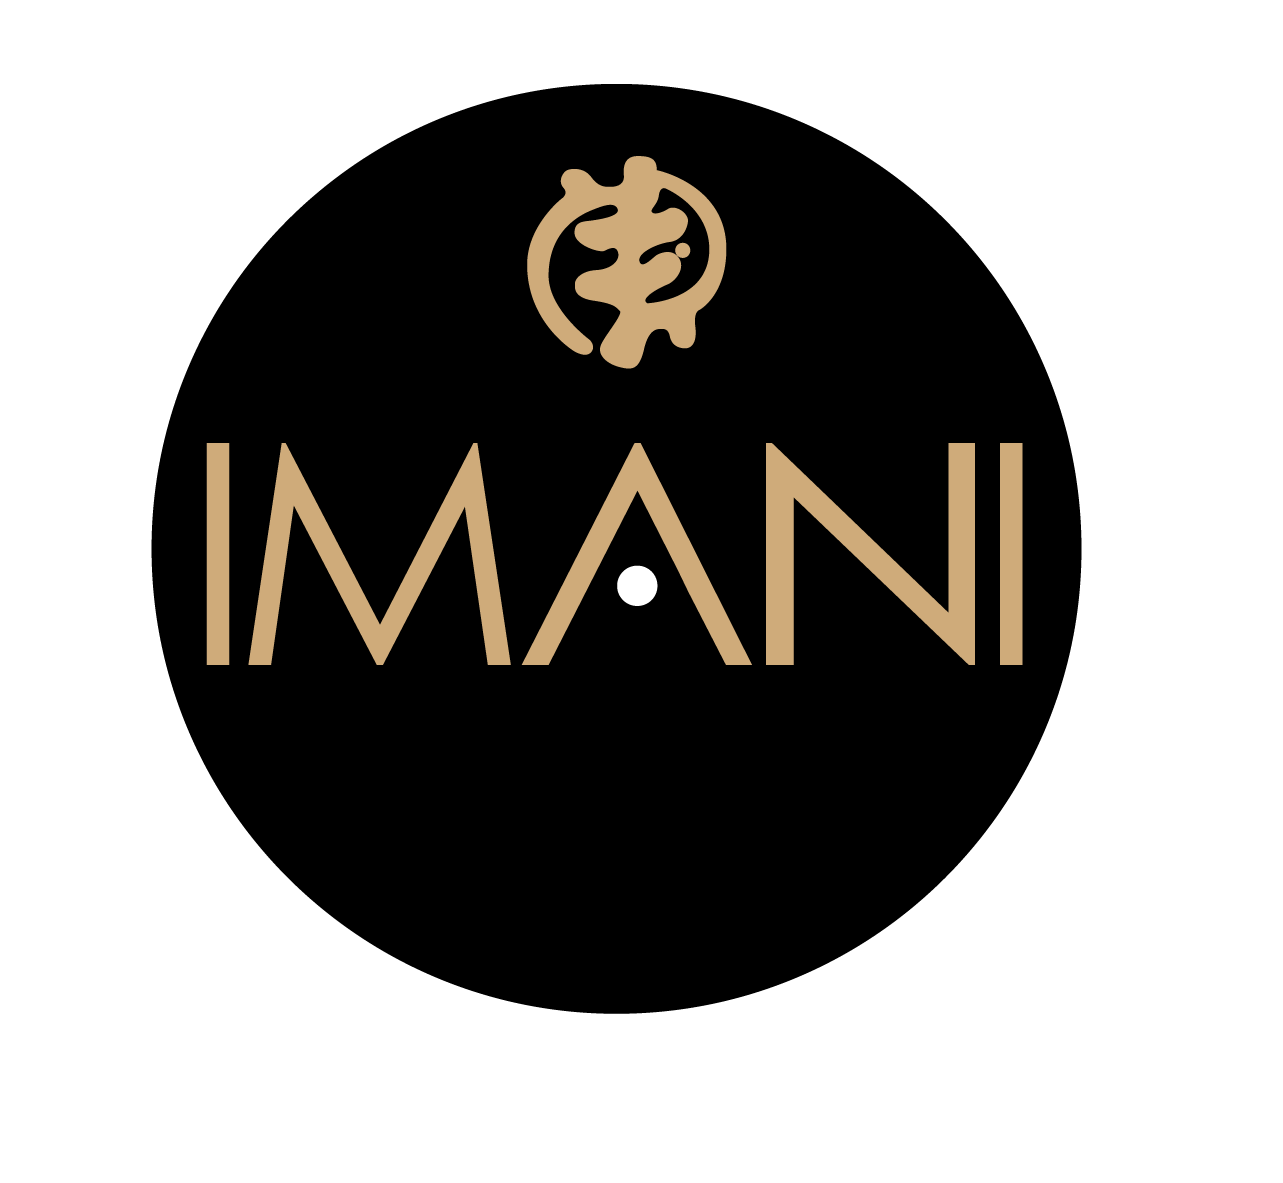 16th Annual Imani Gala Donationmatch